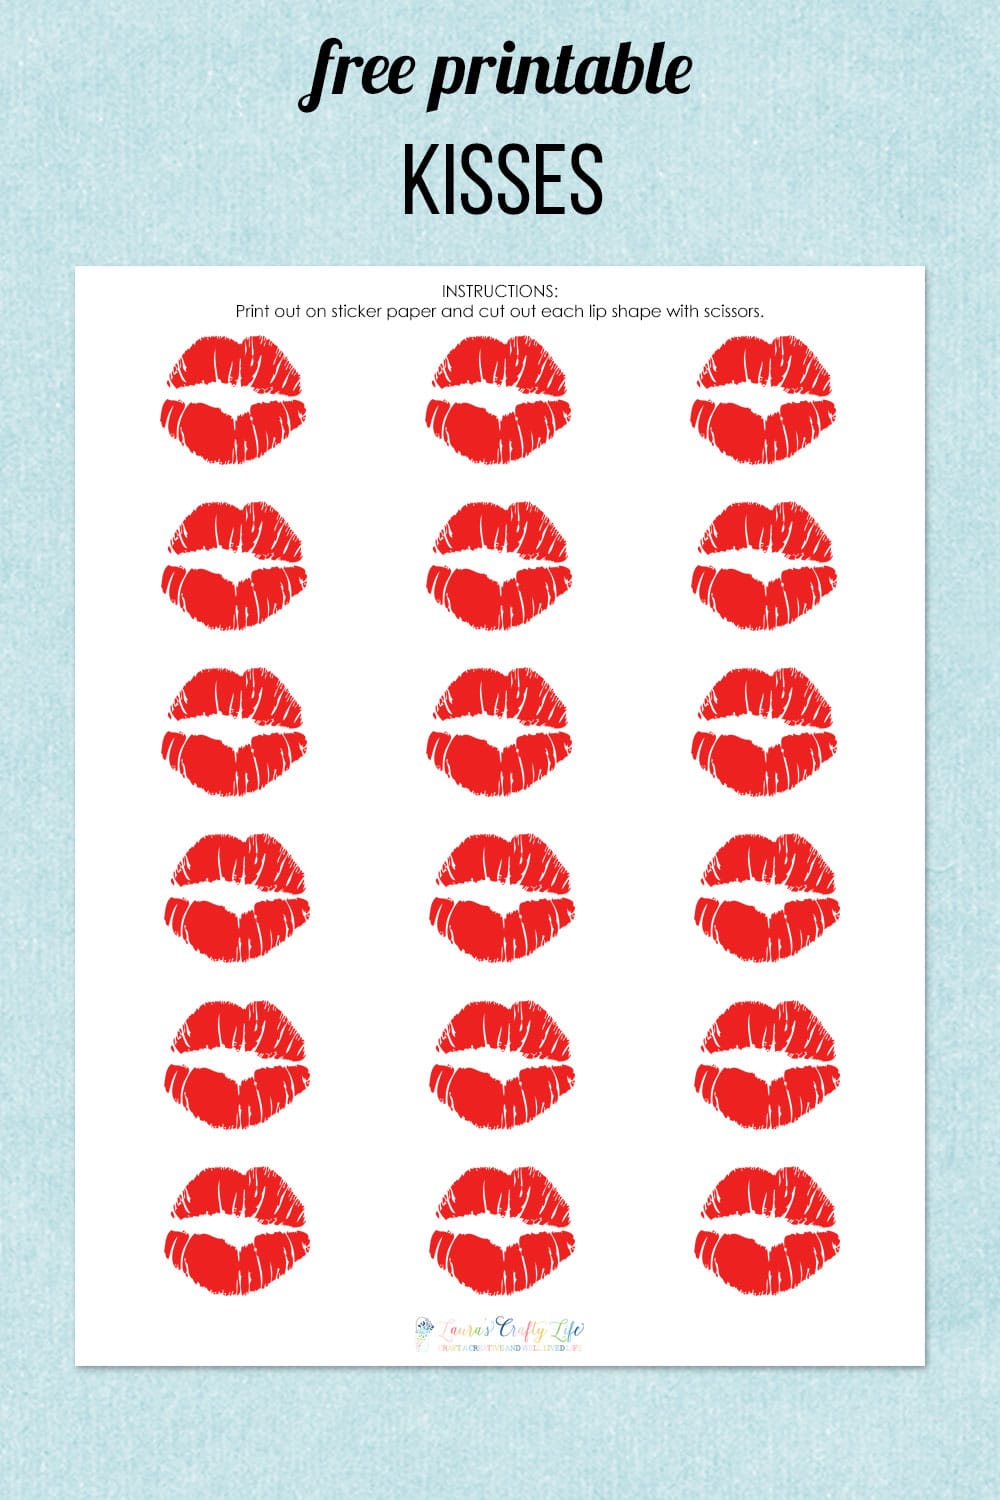 free printable kisses for game